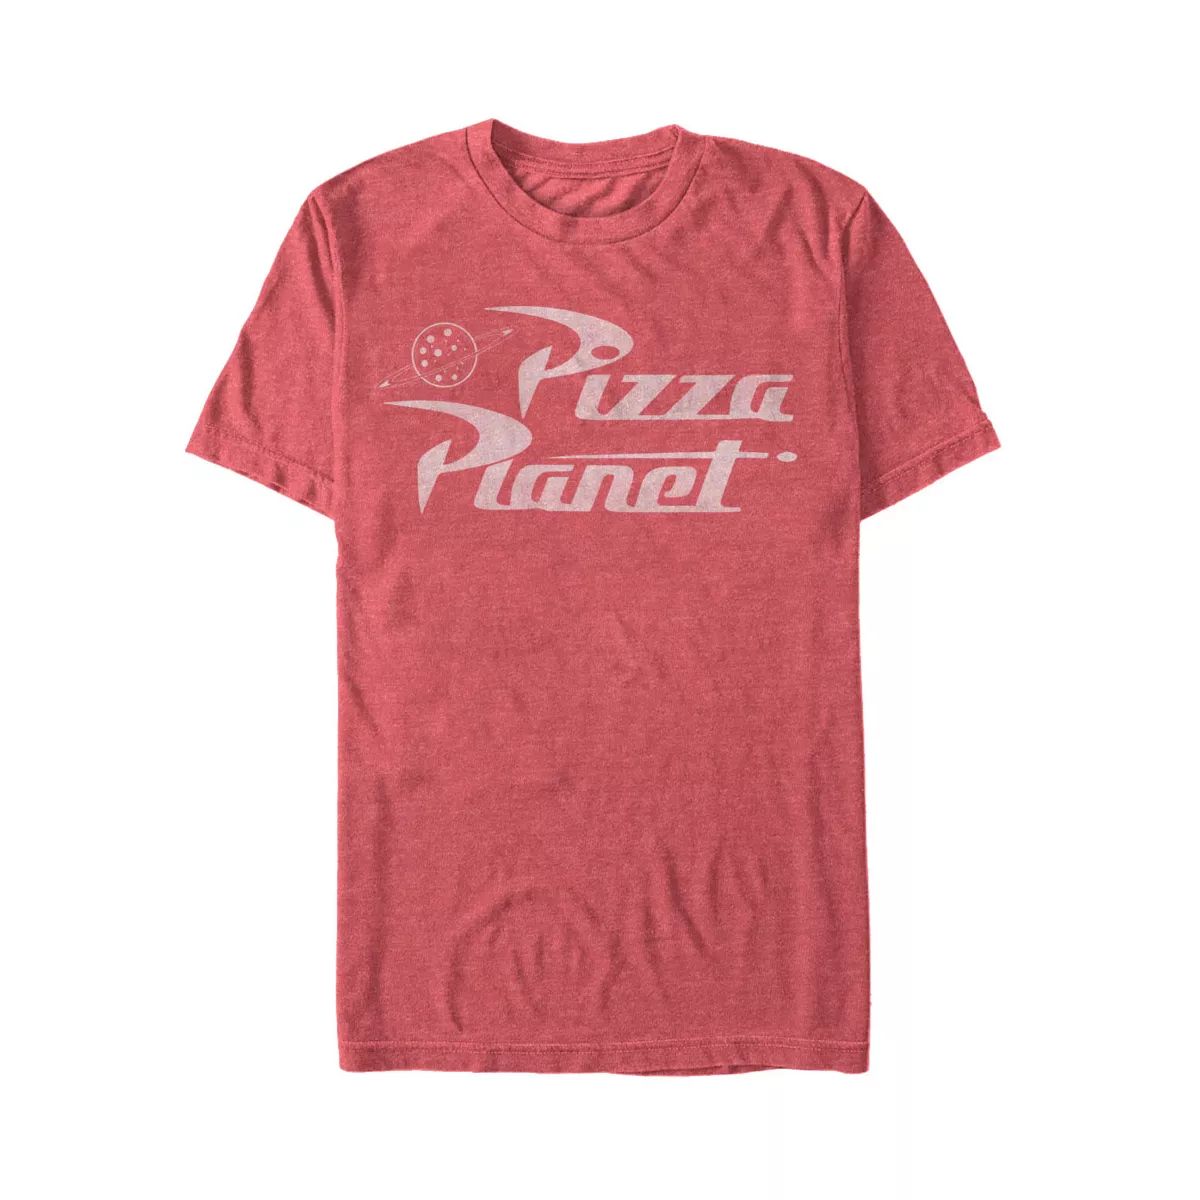 Men's Toy Story Pizza Planet Logo T-Shirt | Target